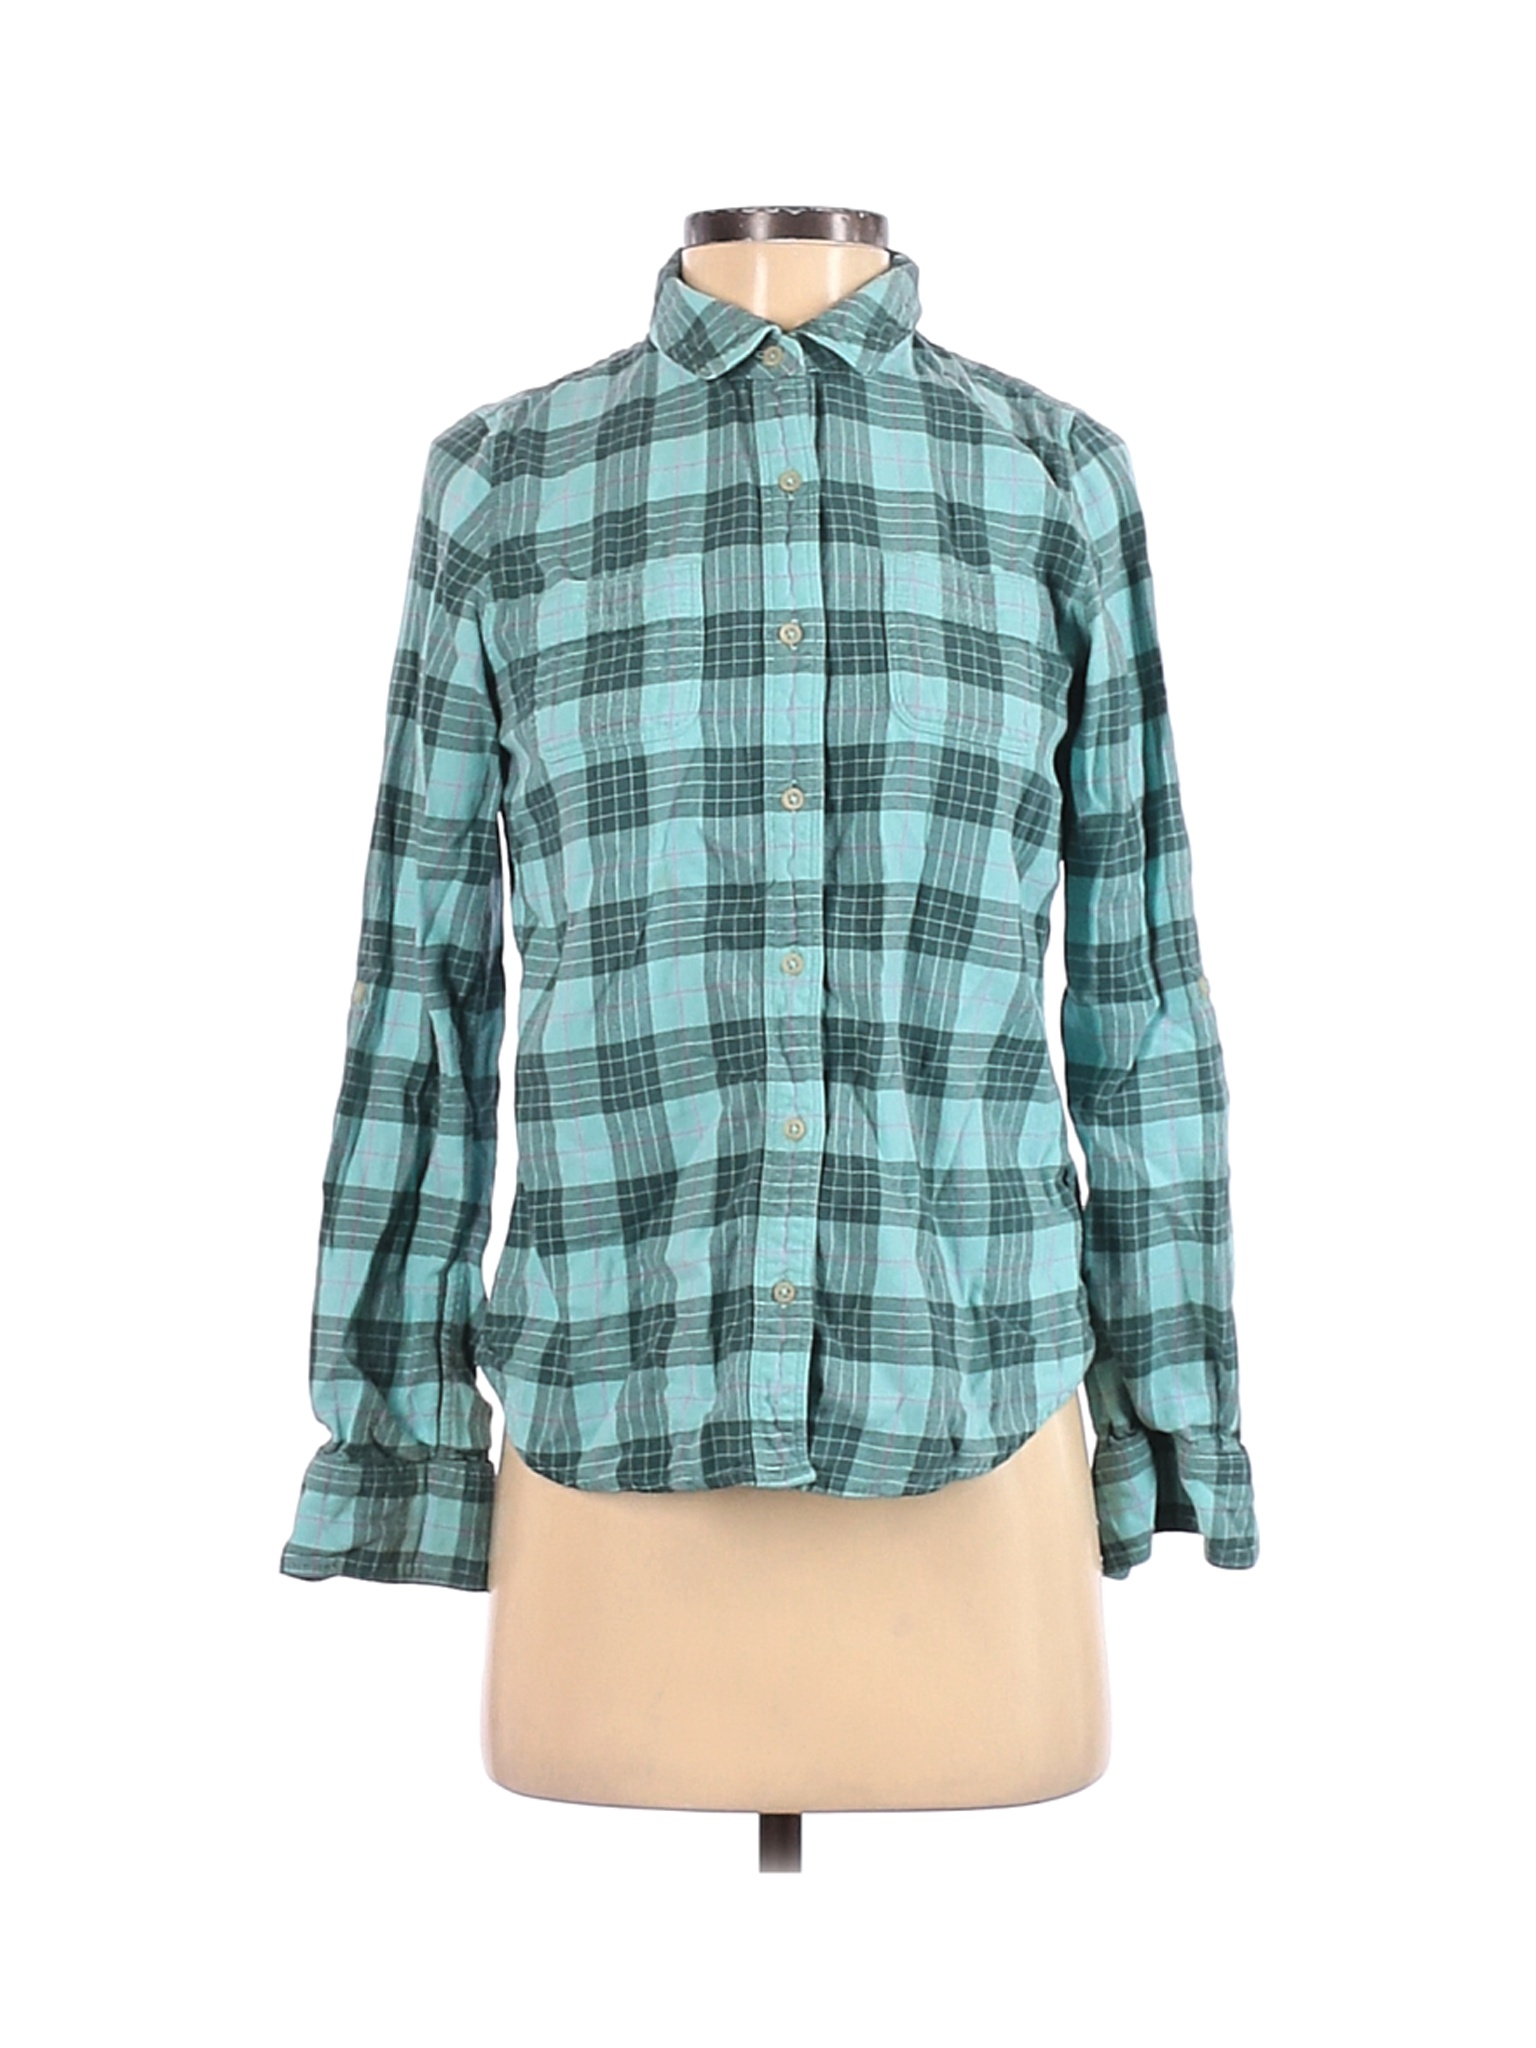 The North Face Women Blue Long Sleeve Button-Down Shirt S | eBay